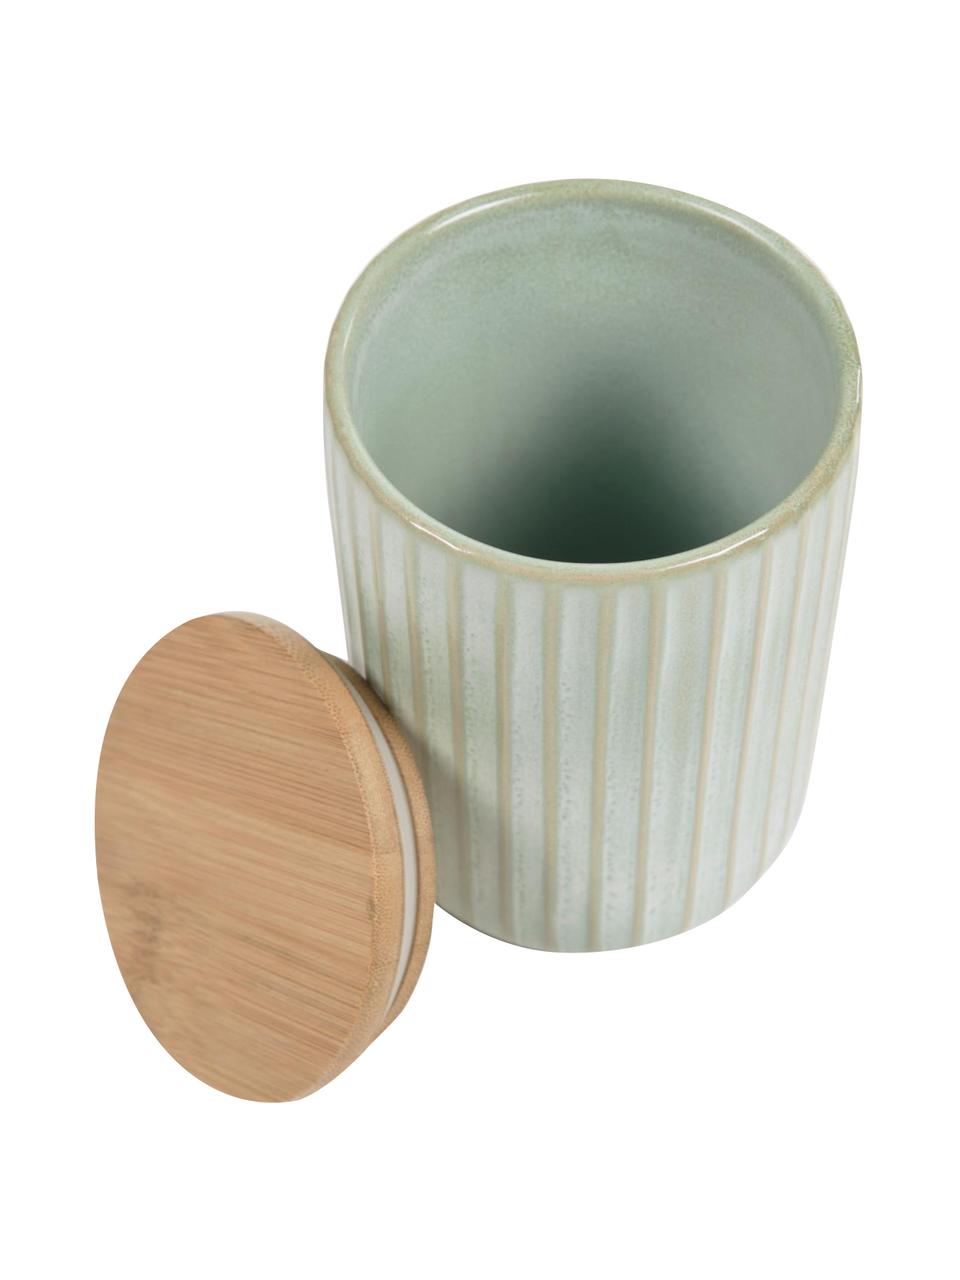 Opbergpot Itziar van keramiek in lichtgroen, verschillende formaten, Pot: keramiek, Deksel: hout, Lichtgroen, Ø 10 x H 14 cm, 700 ml